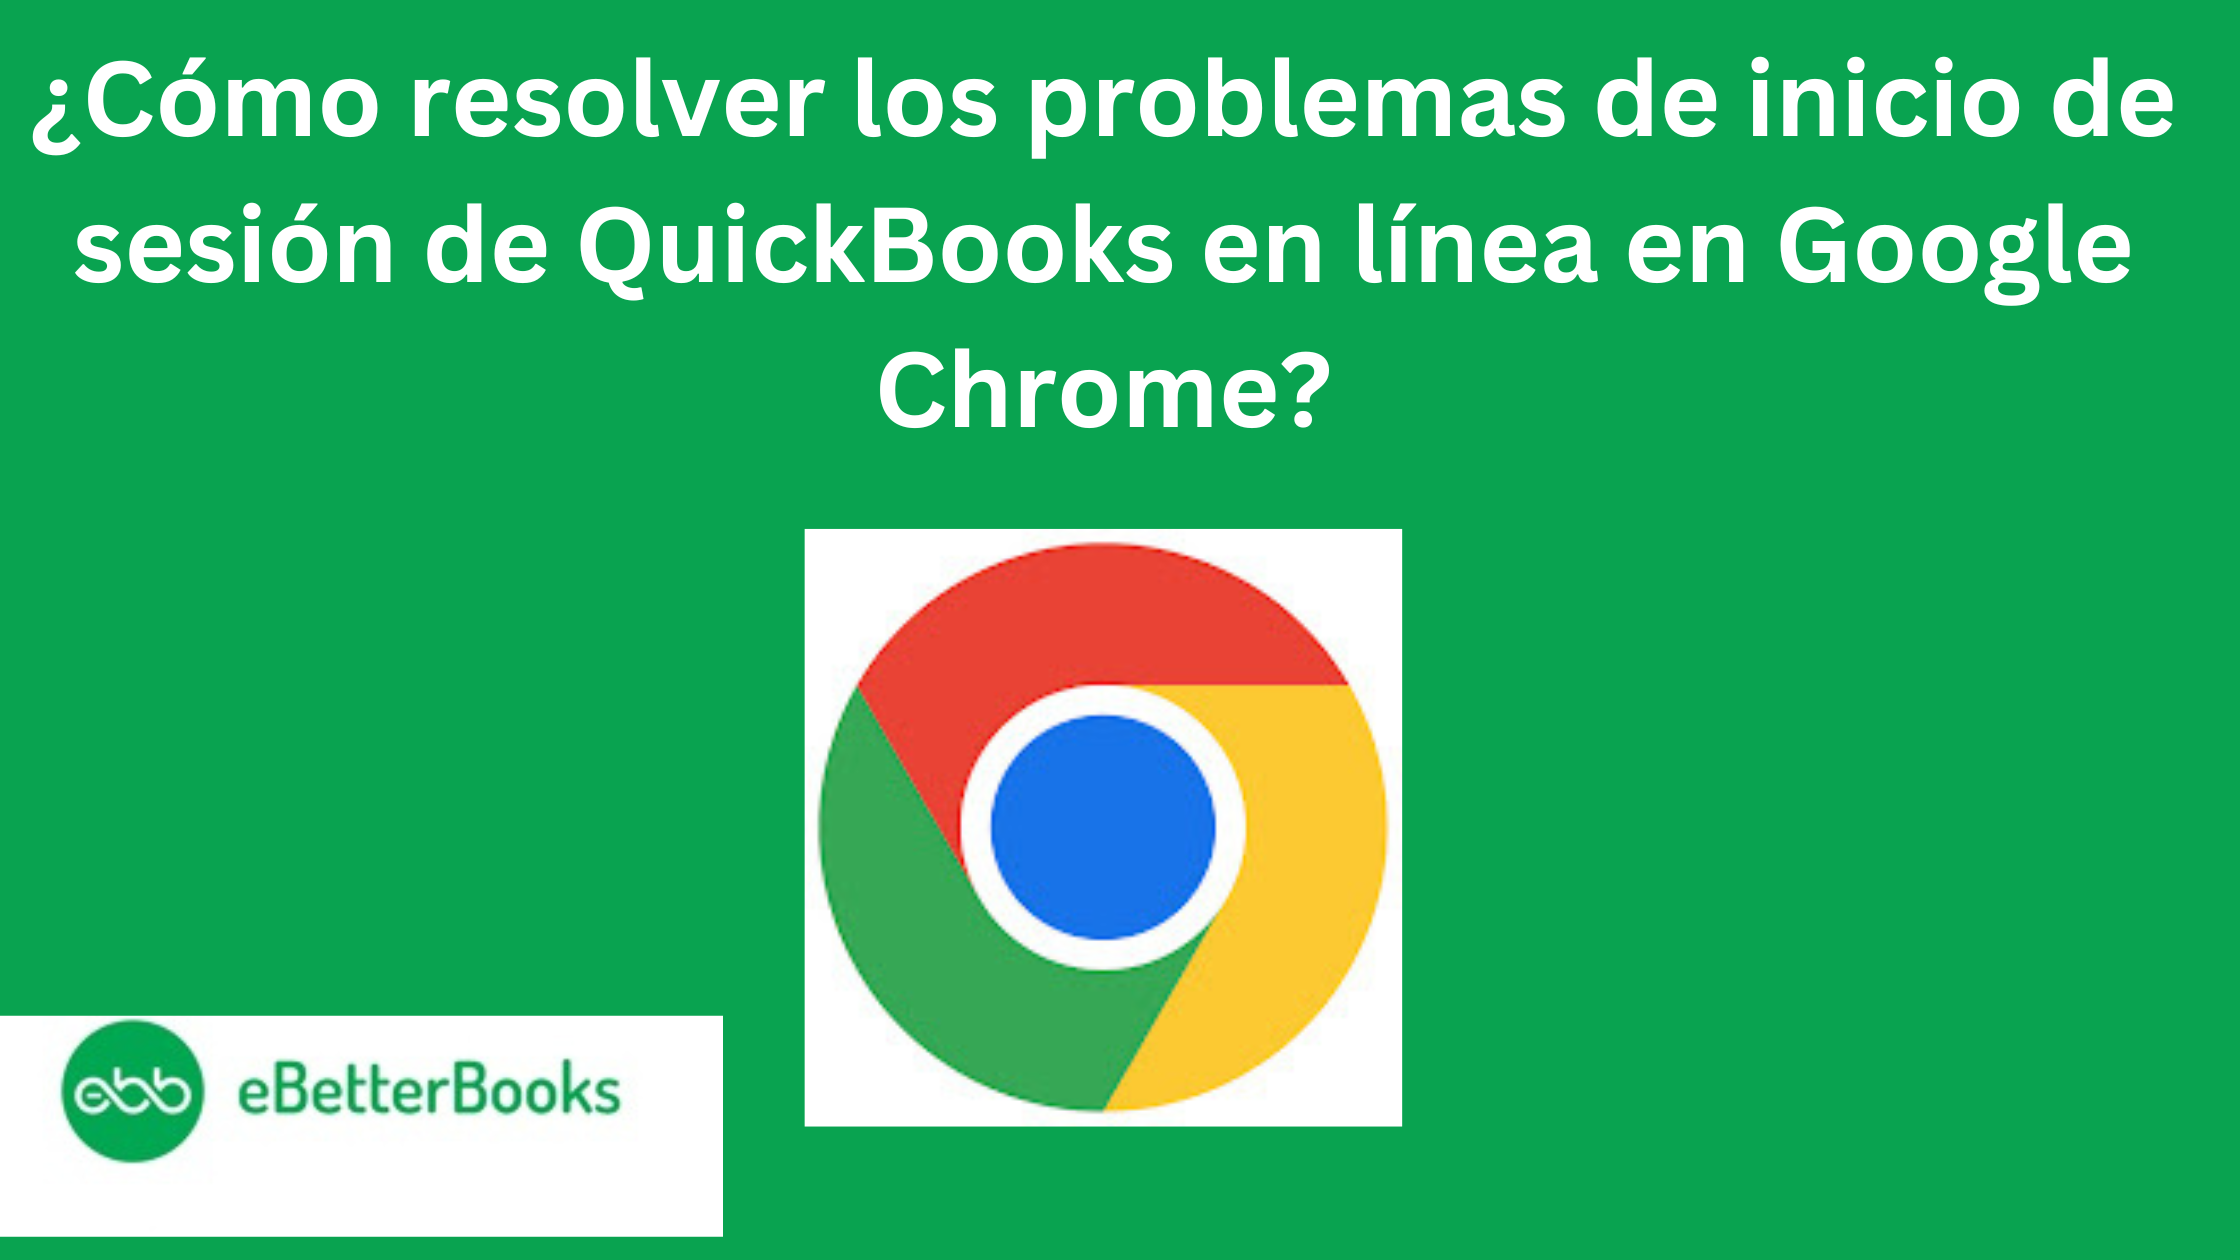 QuickBooks en línea en Google Chrome